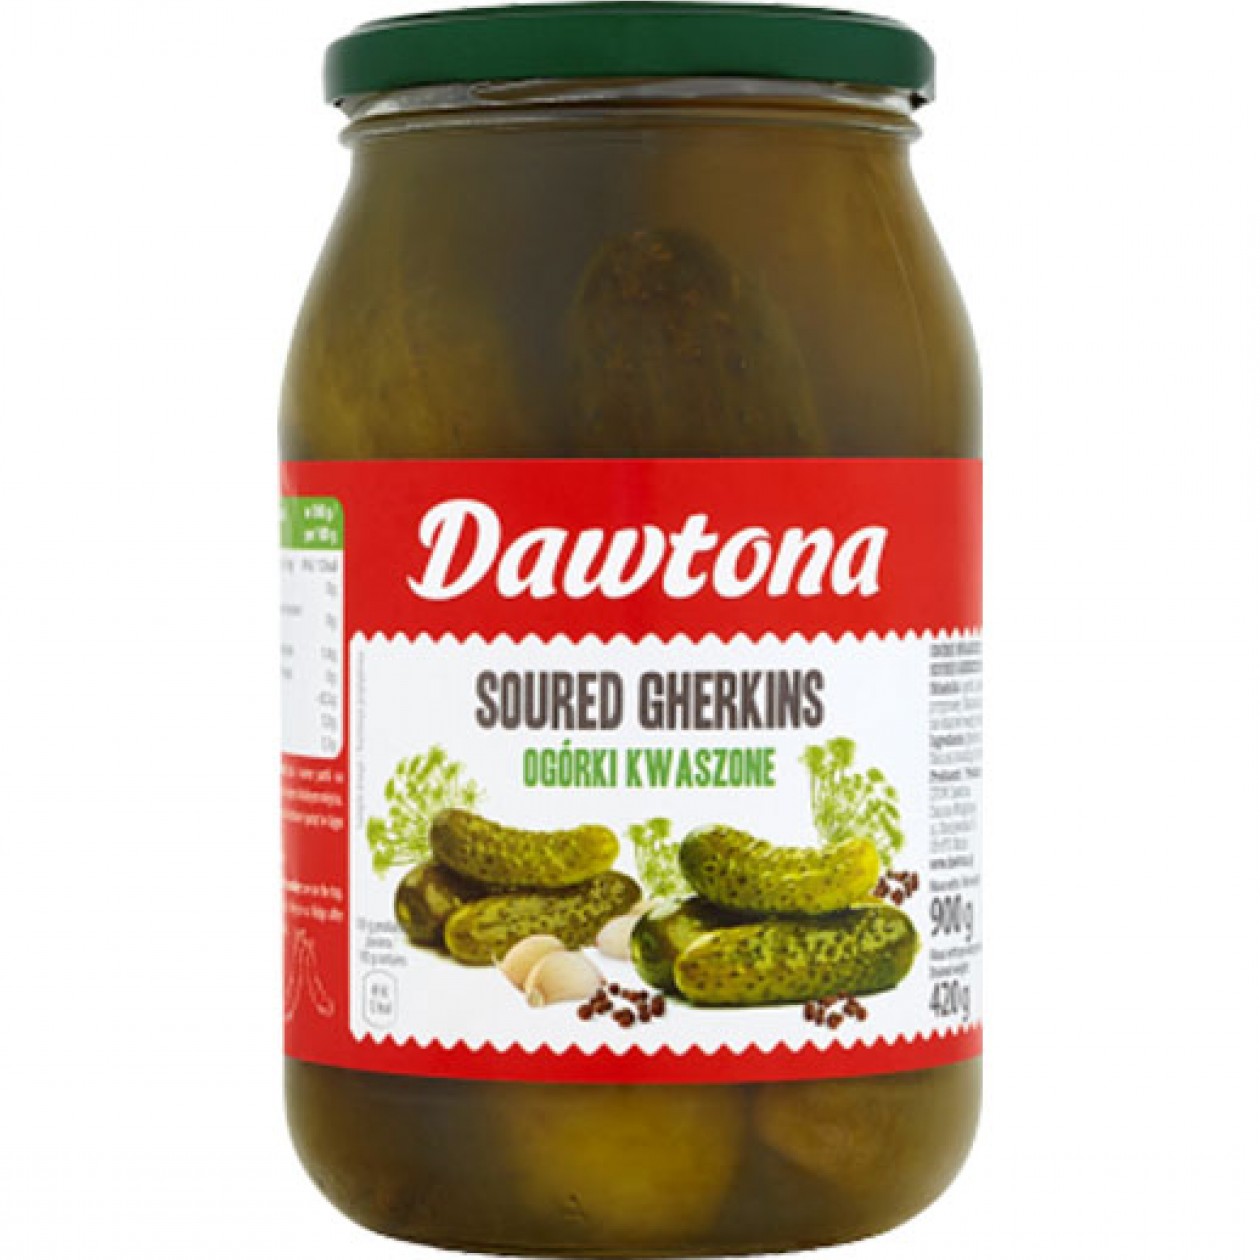 Dawtona Ogorki Kwaszone (Cucumbers In Brine) 6x900g